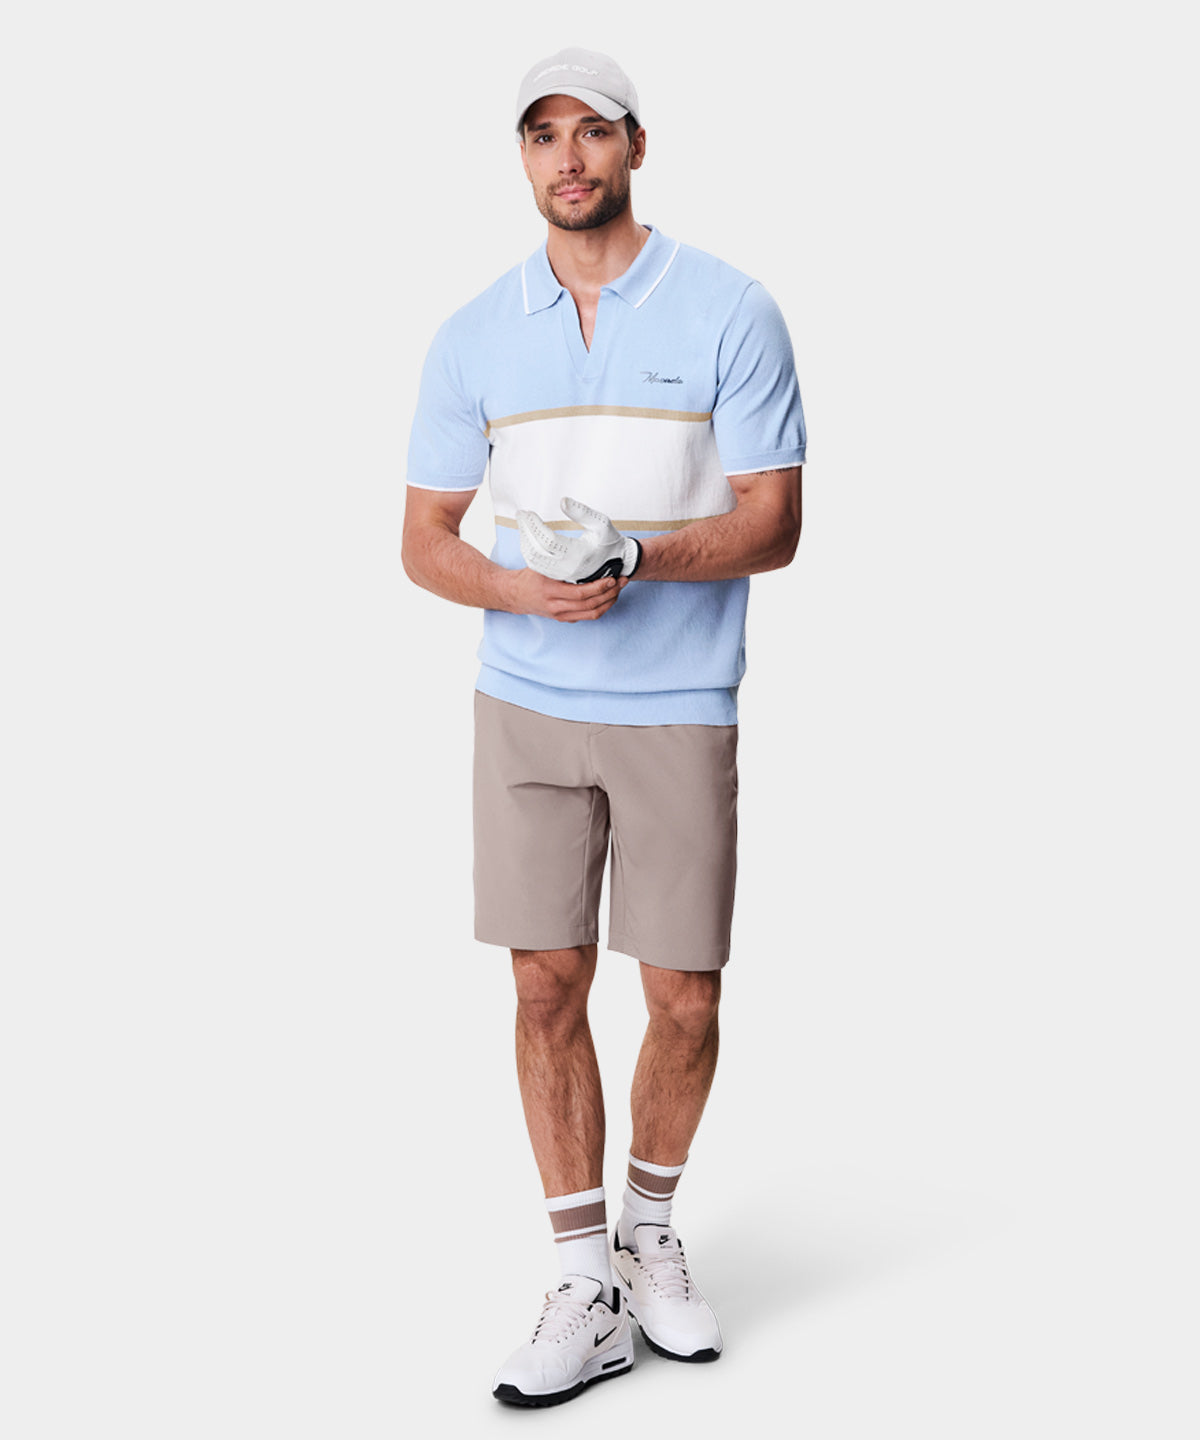 Mac Intarsia Knit Shirt Macade Golf